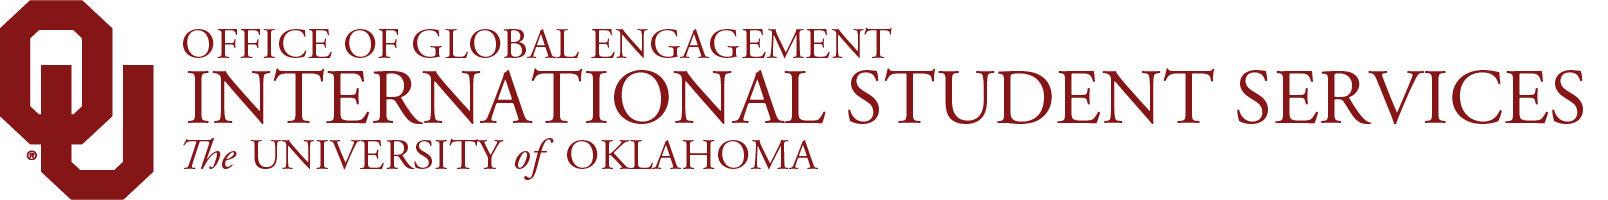 Interlocking OU, Office of Global Engagement, International Student Services, The University of Oklahoma website wordmark.